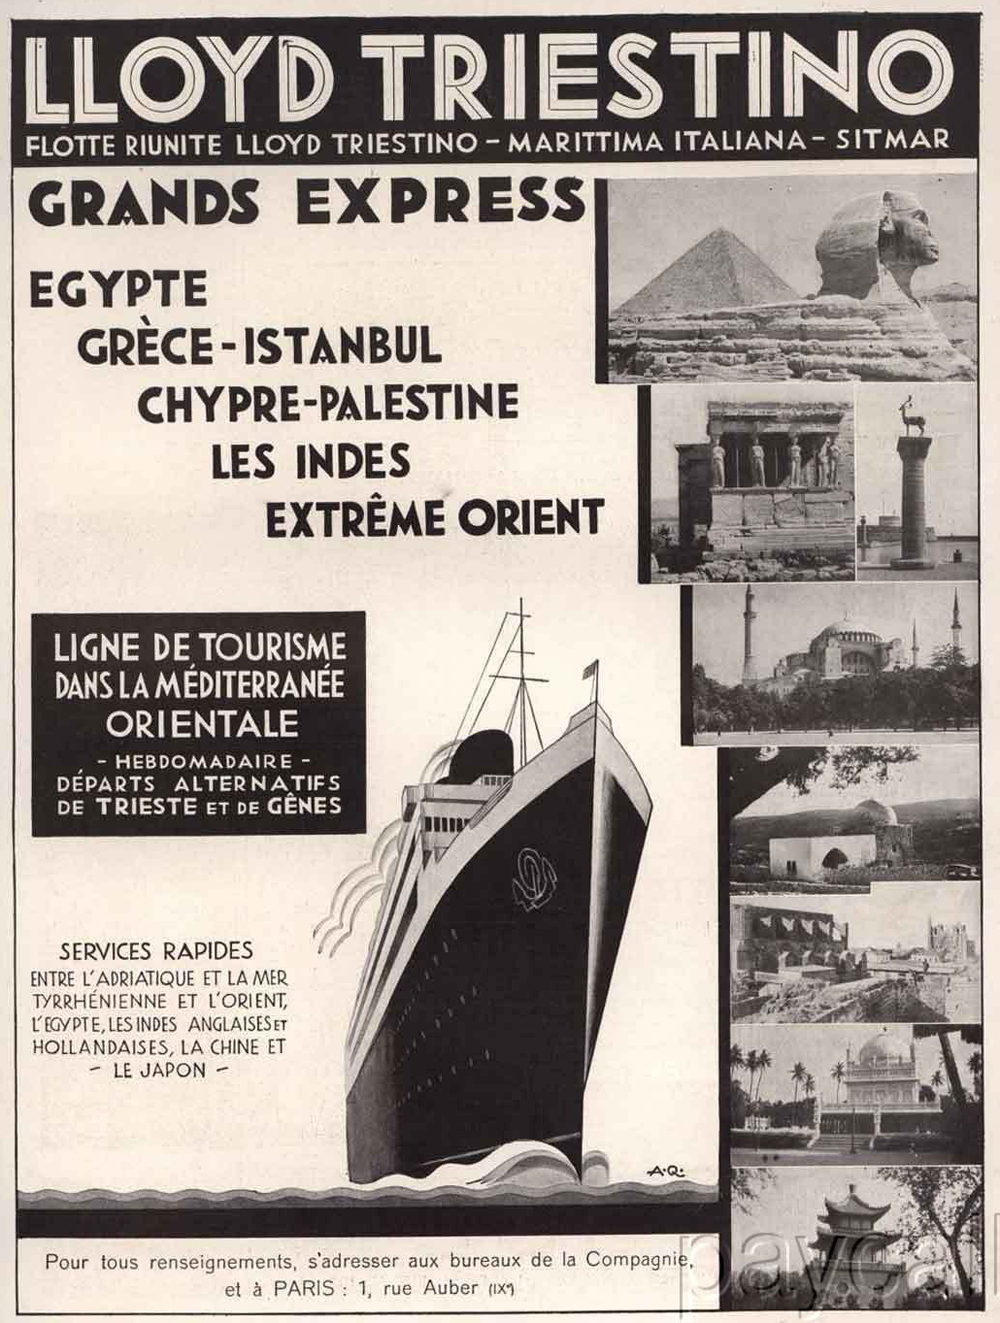 70x50 Mediterranean cruises 1934 Details about   Poster Italian Line Lloyd Triestino 